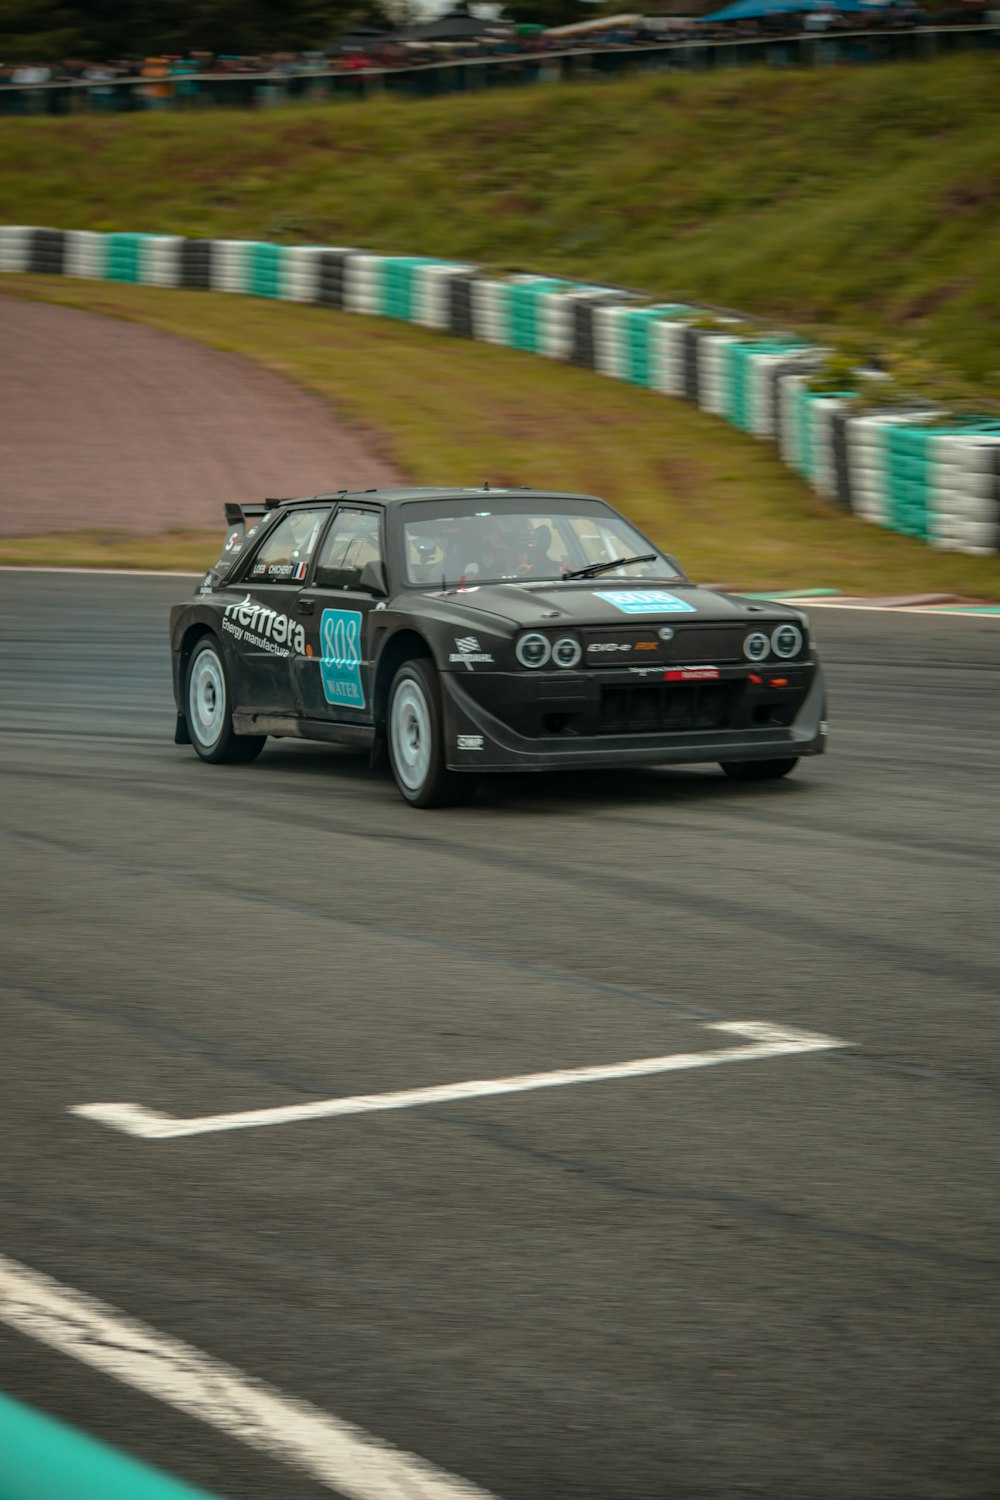 a black car driving down a race track